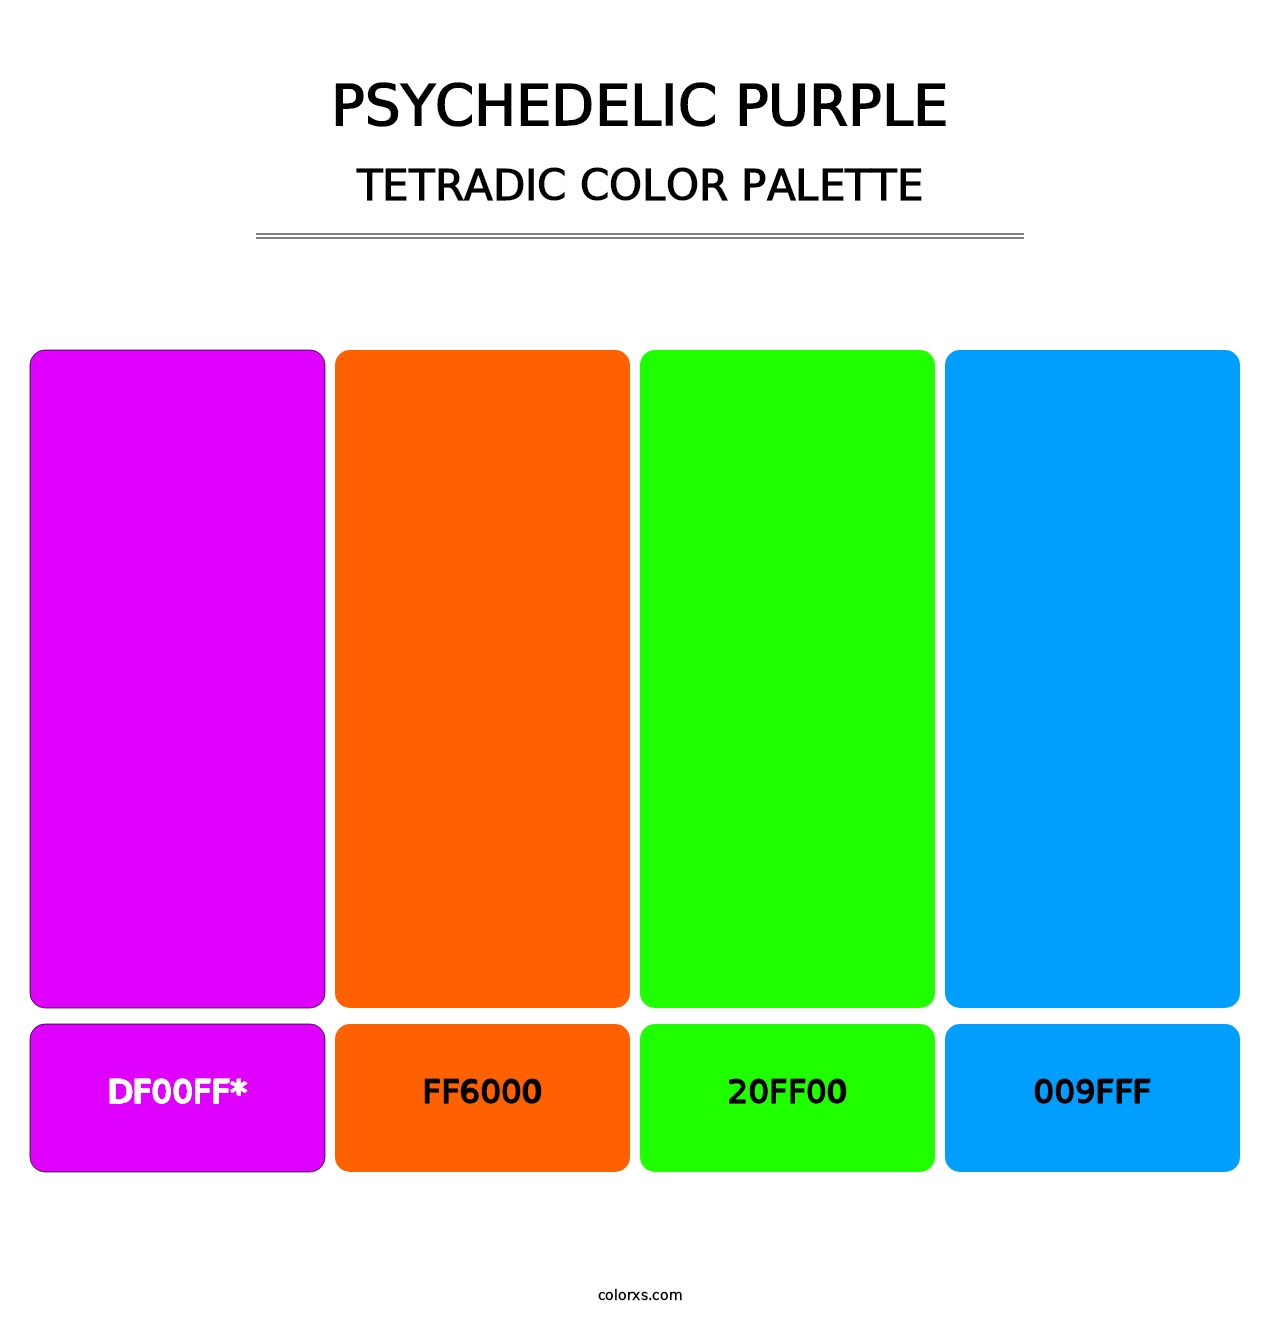 Psychedelic Purple - Tetradic Color Palette